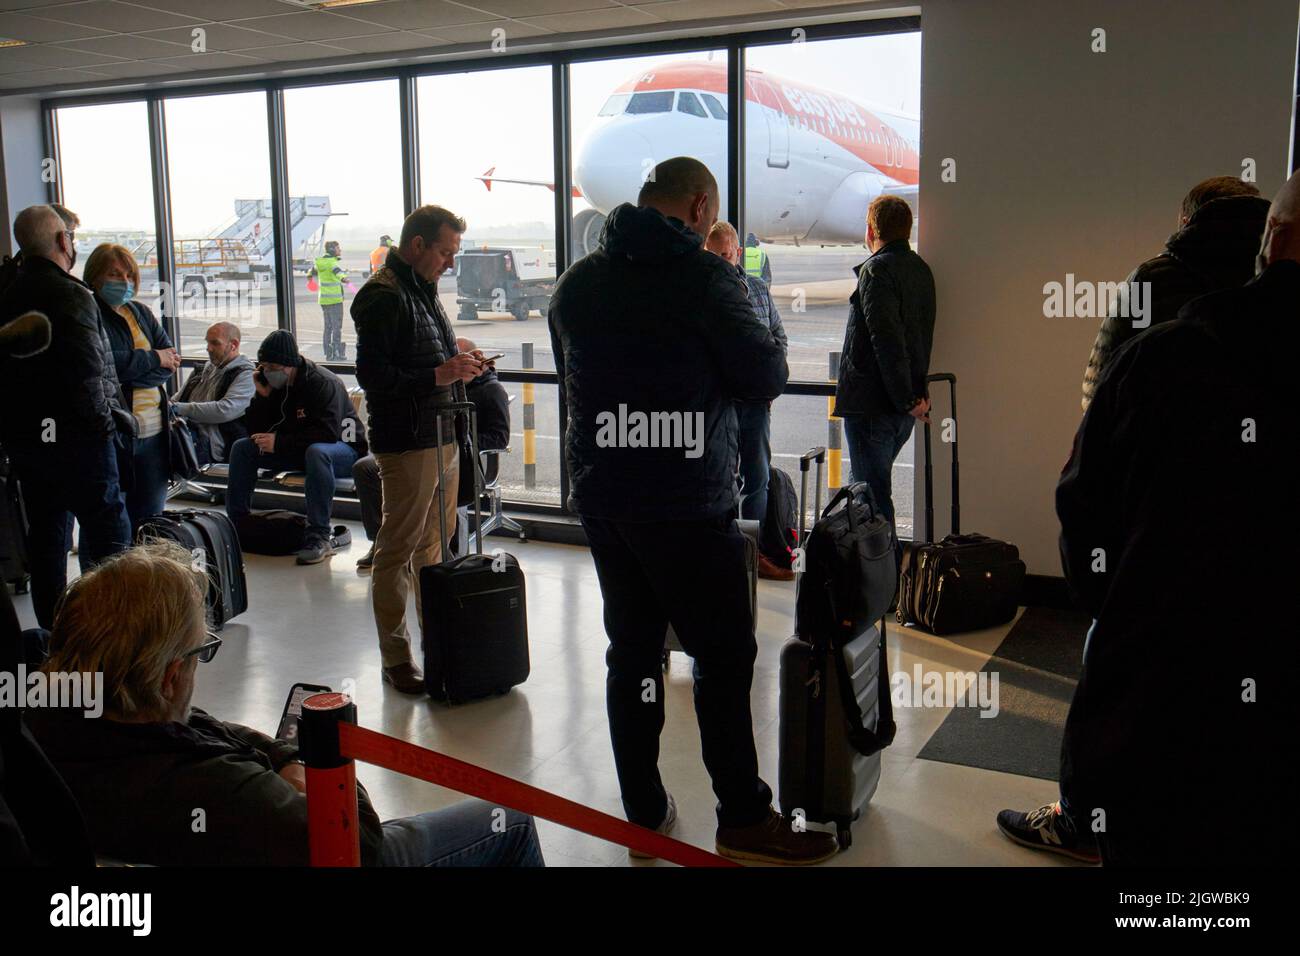 speedy boarding section of easyjet passengers waiting for aircraft flight depature at belfast international airport uk Stock Photo